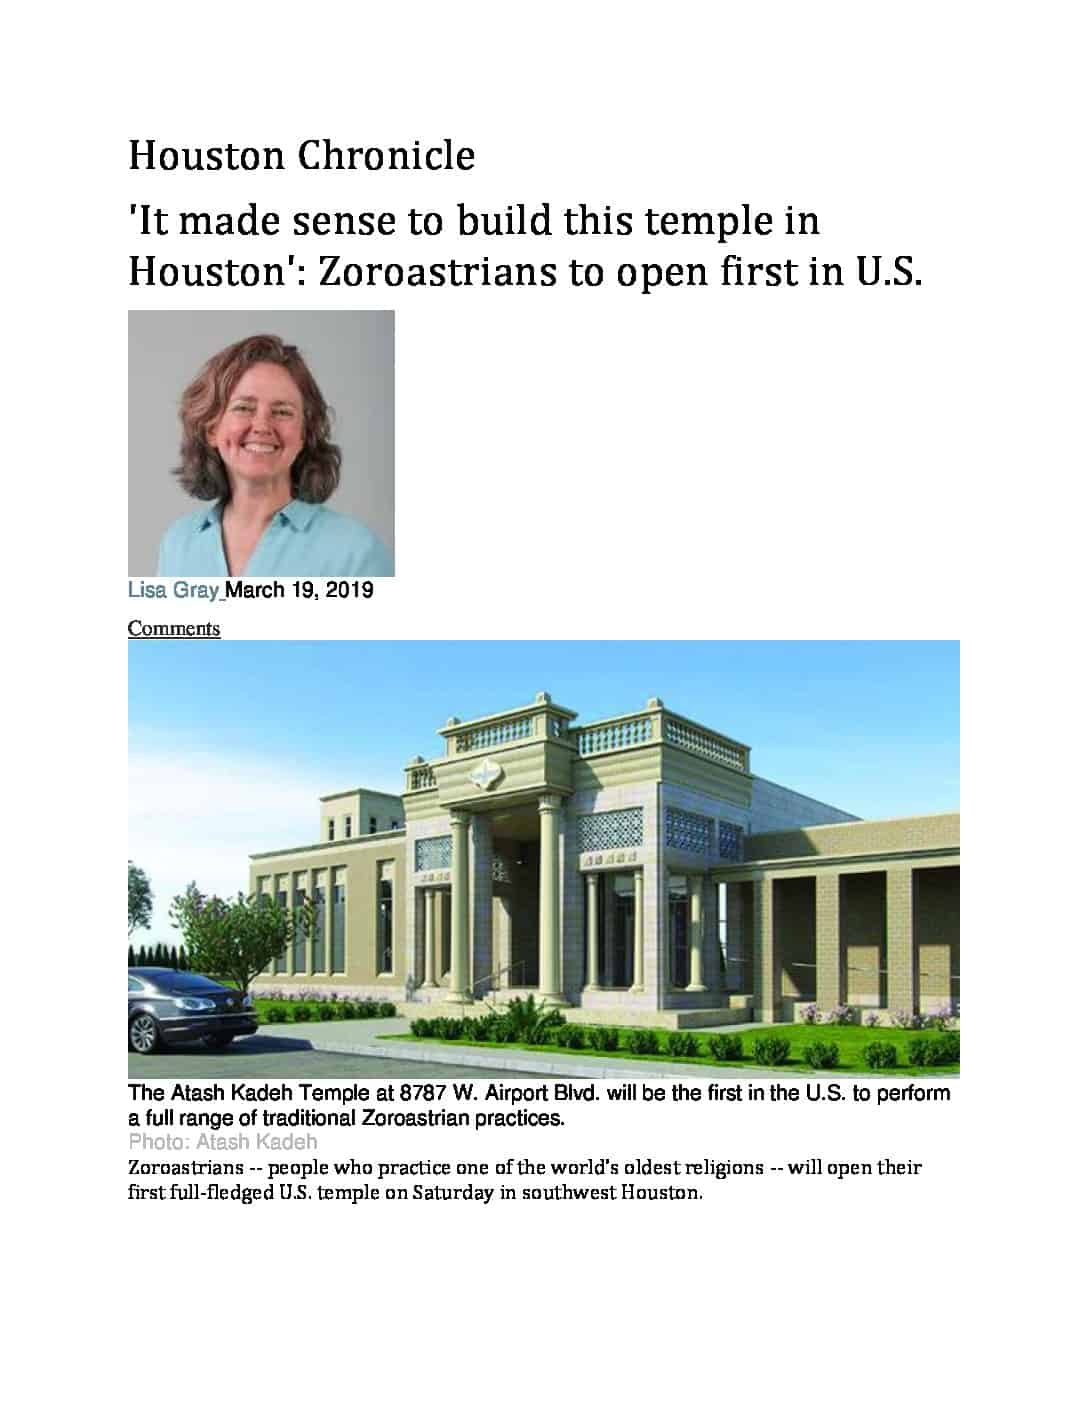 Zoroastrian Temple – Houston Chronicle (short)